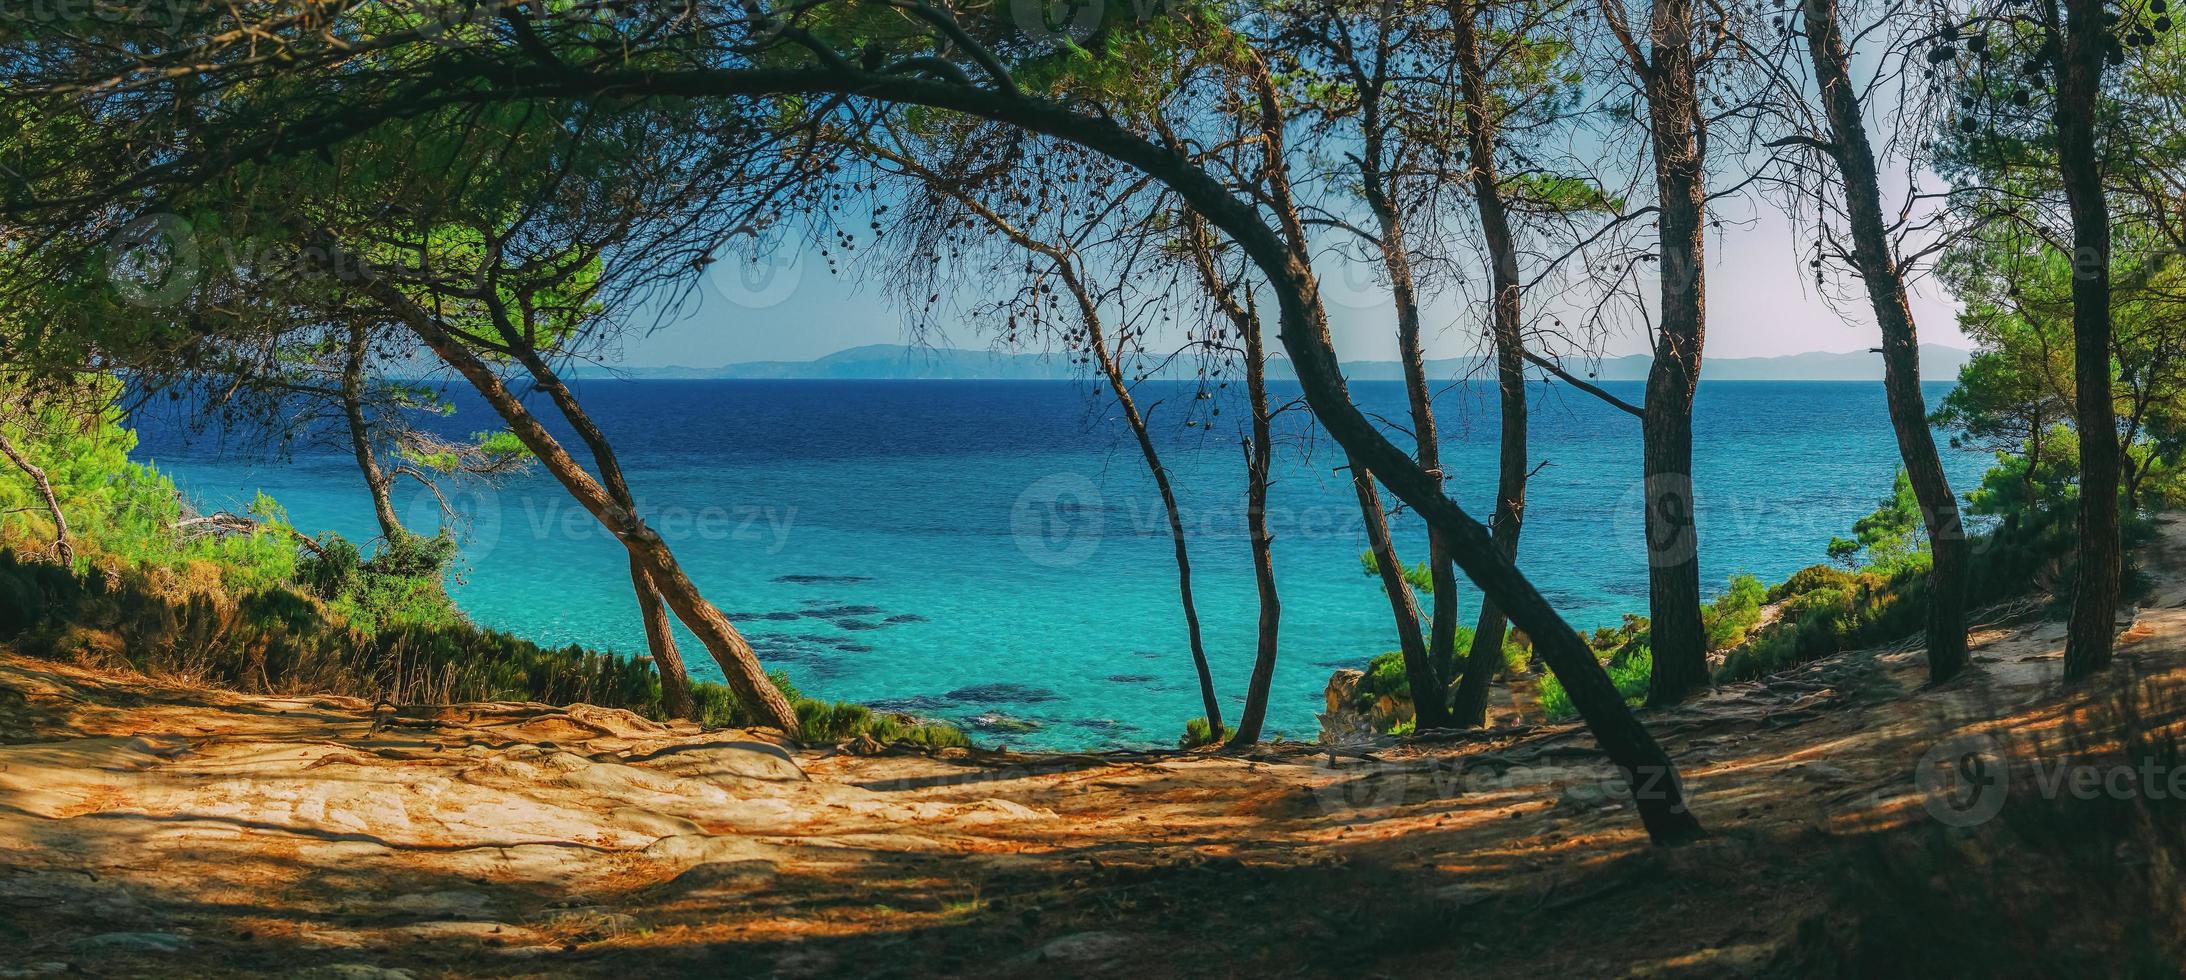 Portokali beach, view from the pine forest, Sithonia, peninsula Halkidiki, Greece. photo